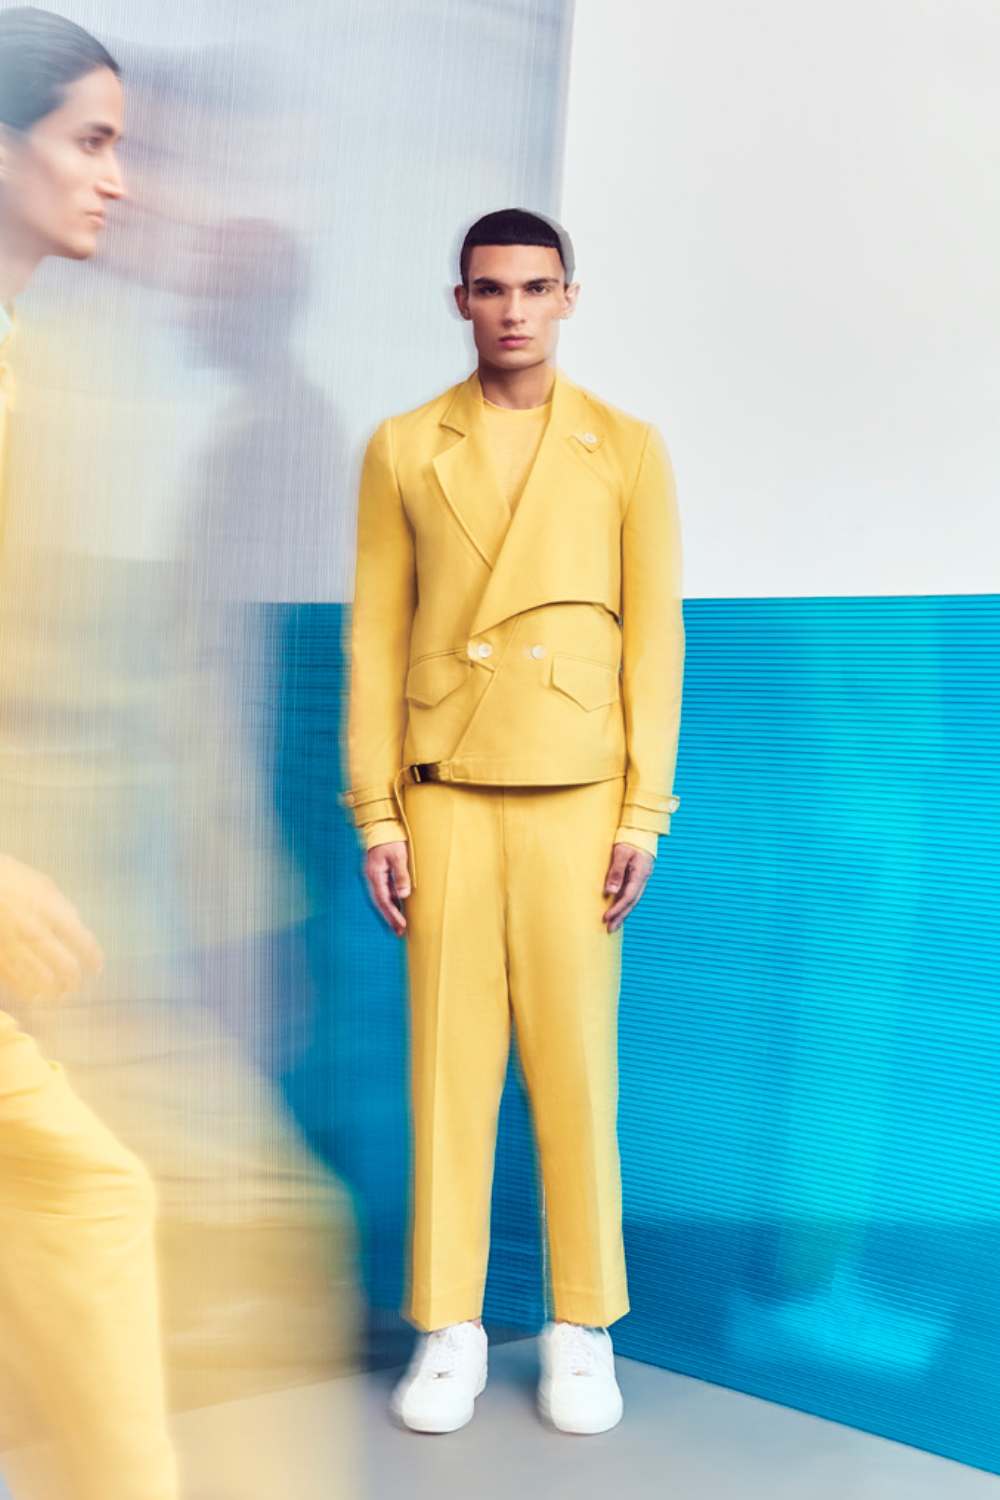 Idyll Yellow Suit Set